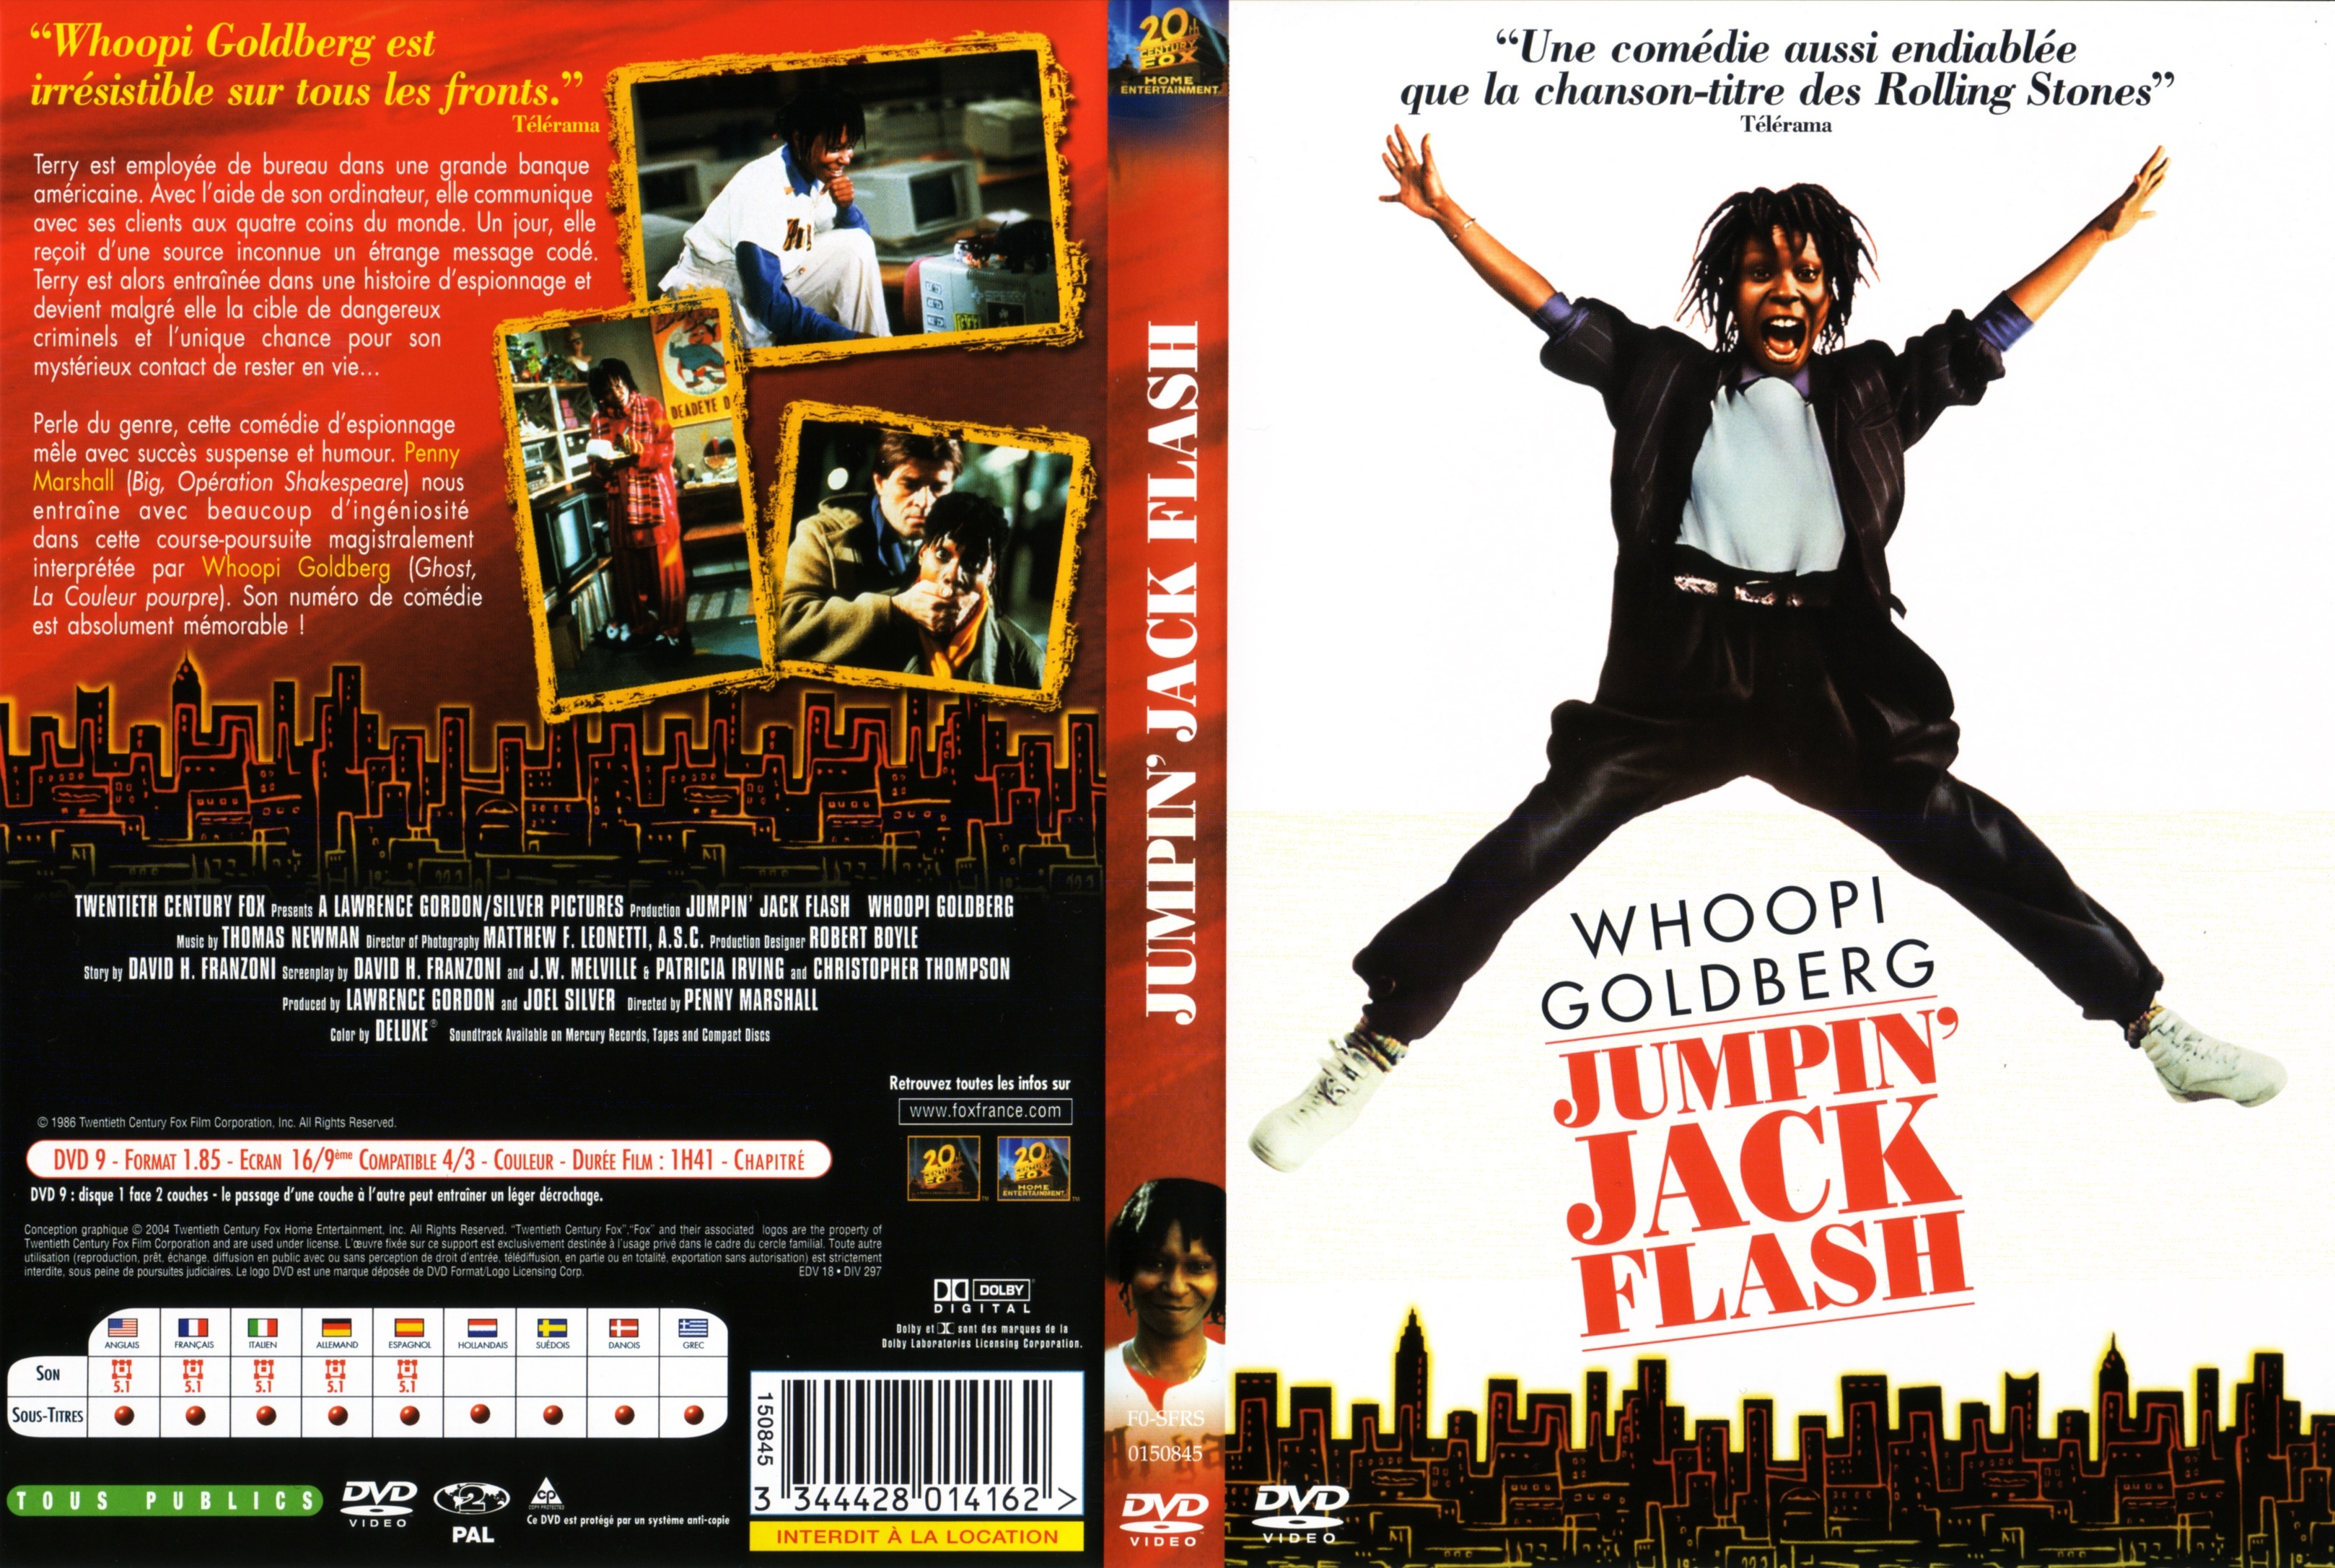 Jaquette DVD Jumpin